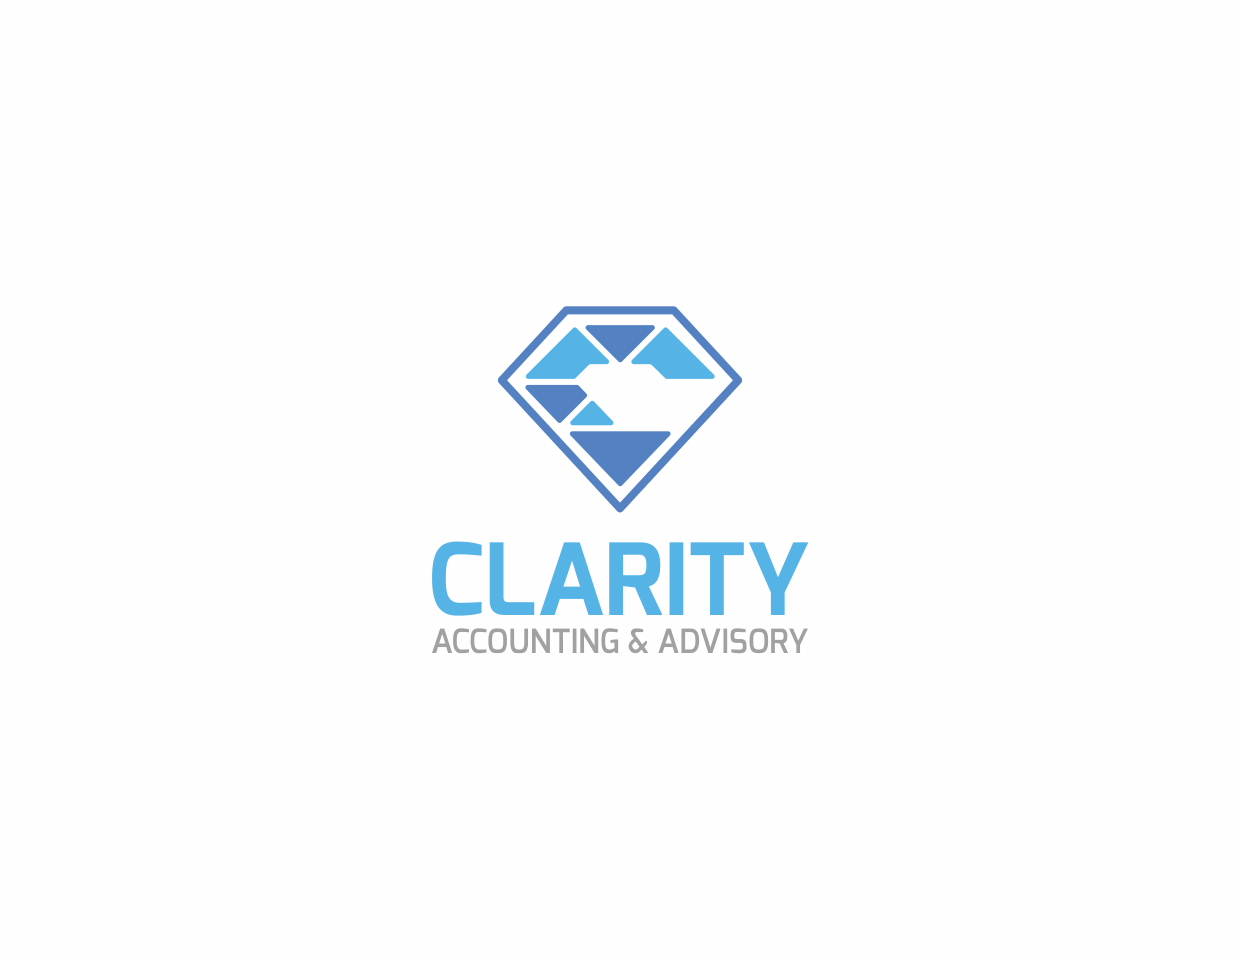 Diamond-Shaped Company Logo - Elegant, Modern, Accounting Logo Design for Diamond shape or other